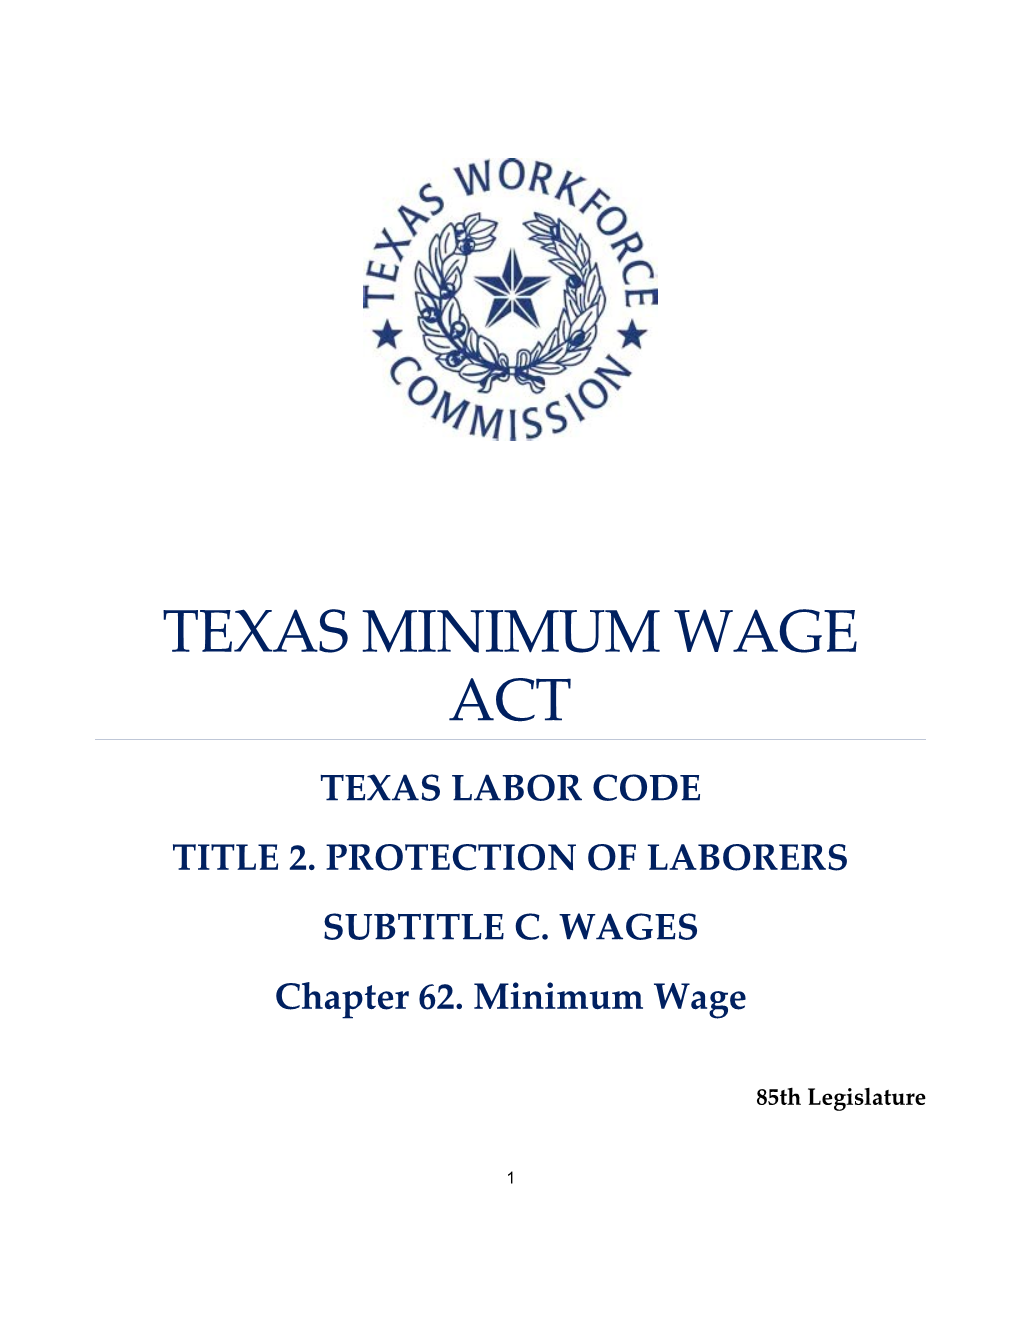 Chapter 62, Labor Code - Minimum Wage